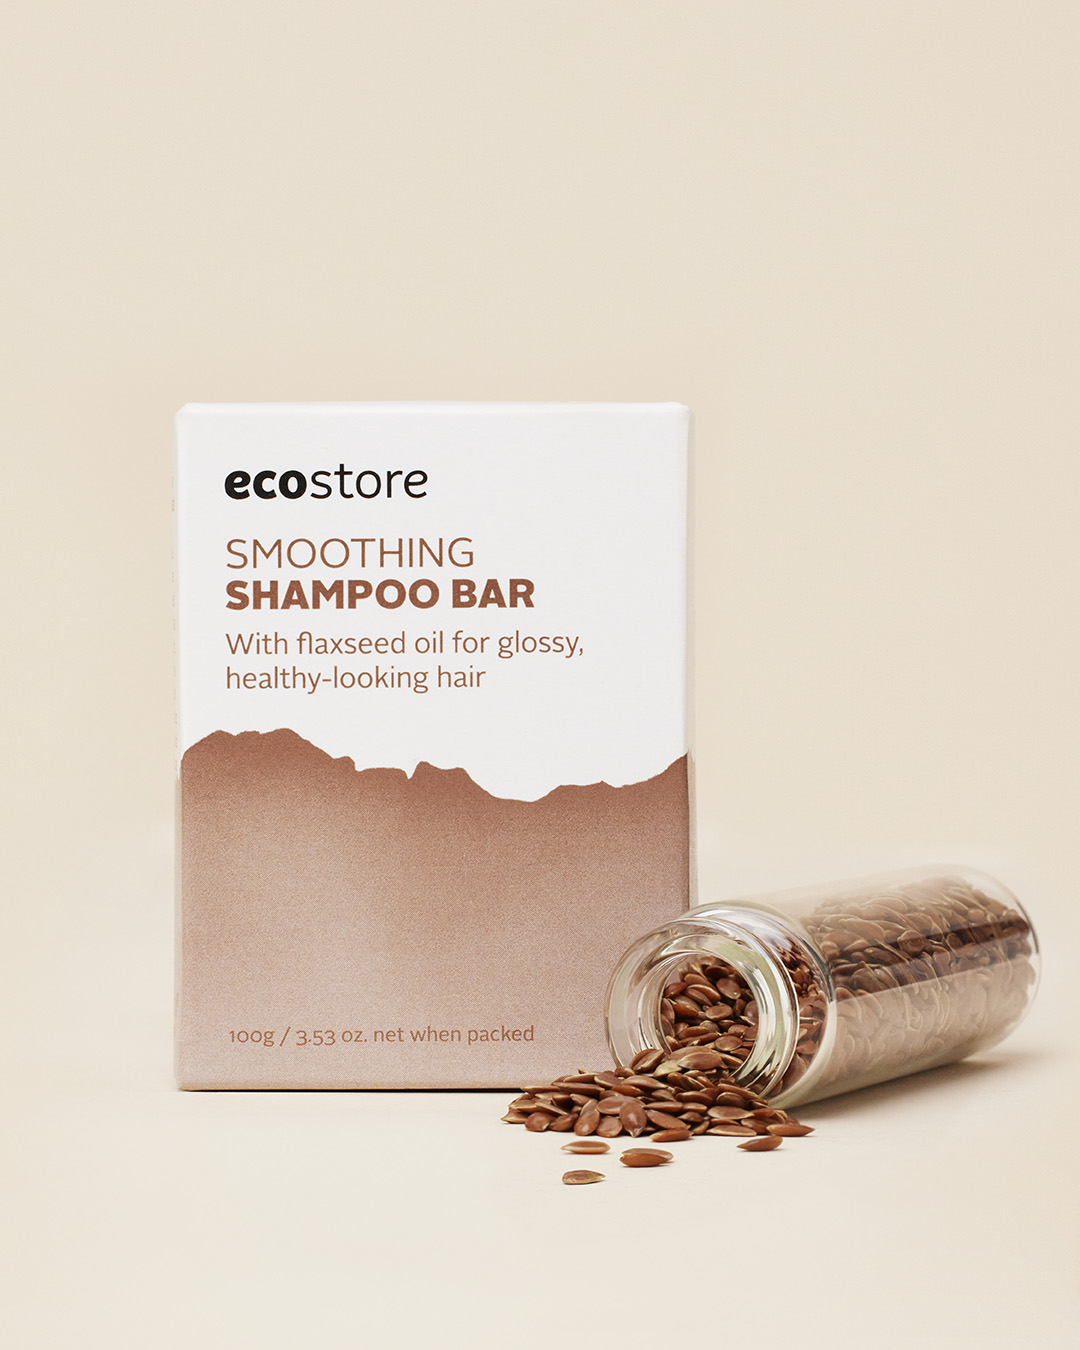 Ecostore shampoo bar and flaxseeds.